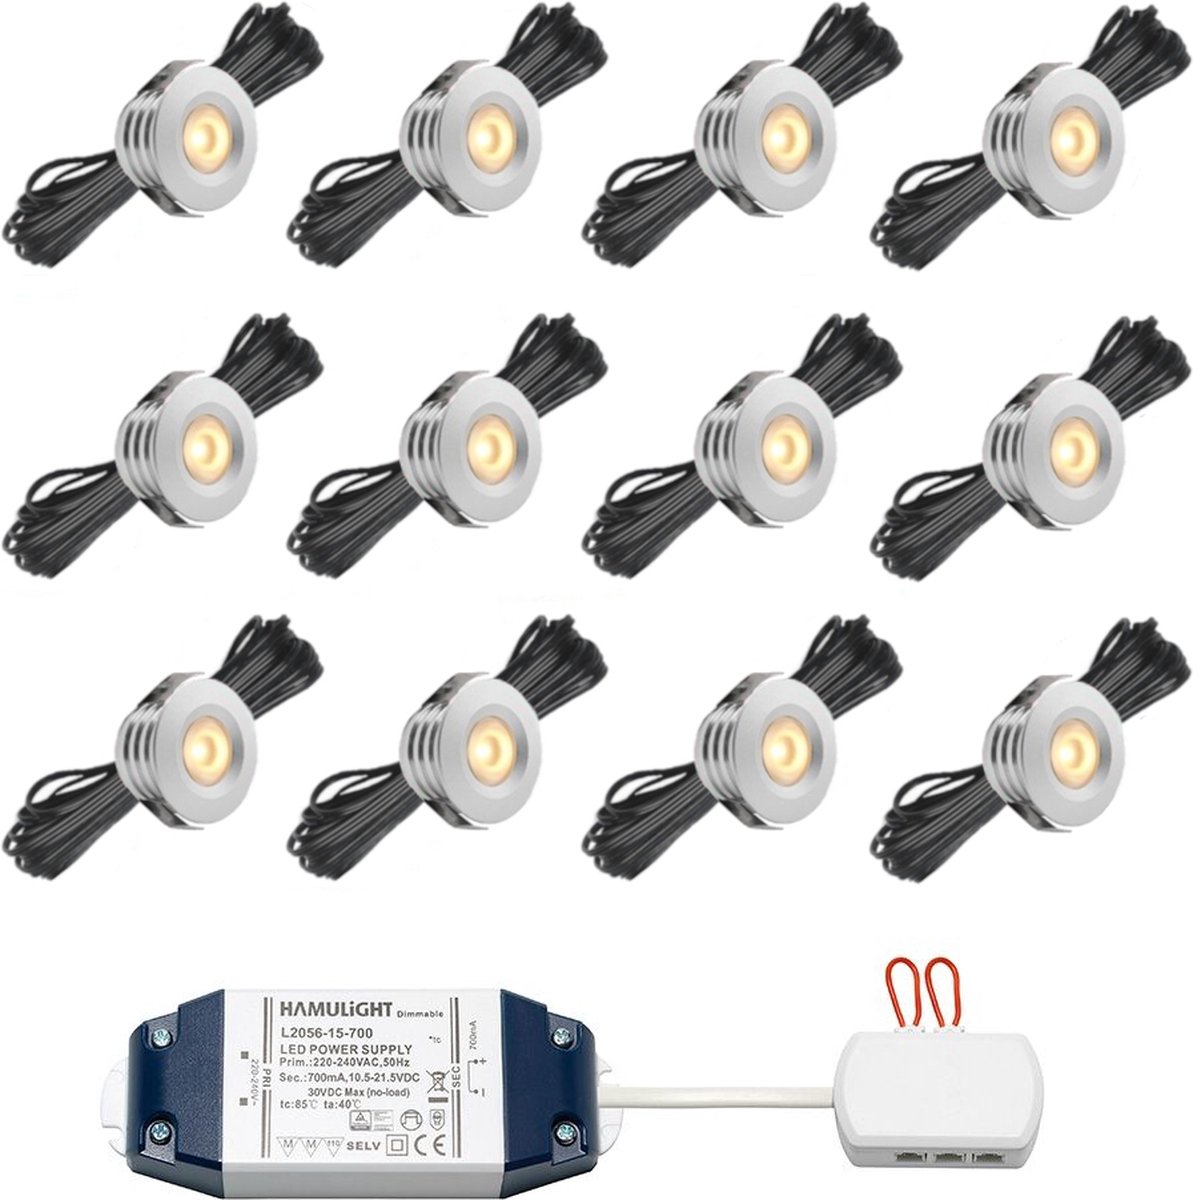 LED inbouwspot Pals bas inclusief trafo - inbouwspots / downlights / plafondspots / led spot / 3W / dimbaar / warm wit / rond / 230V / IP44 / - set van 12 stuks